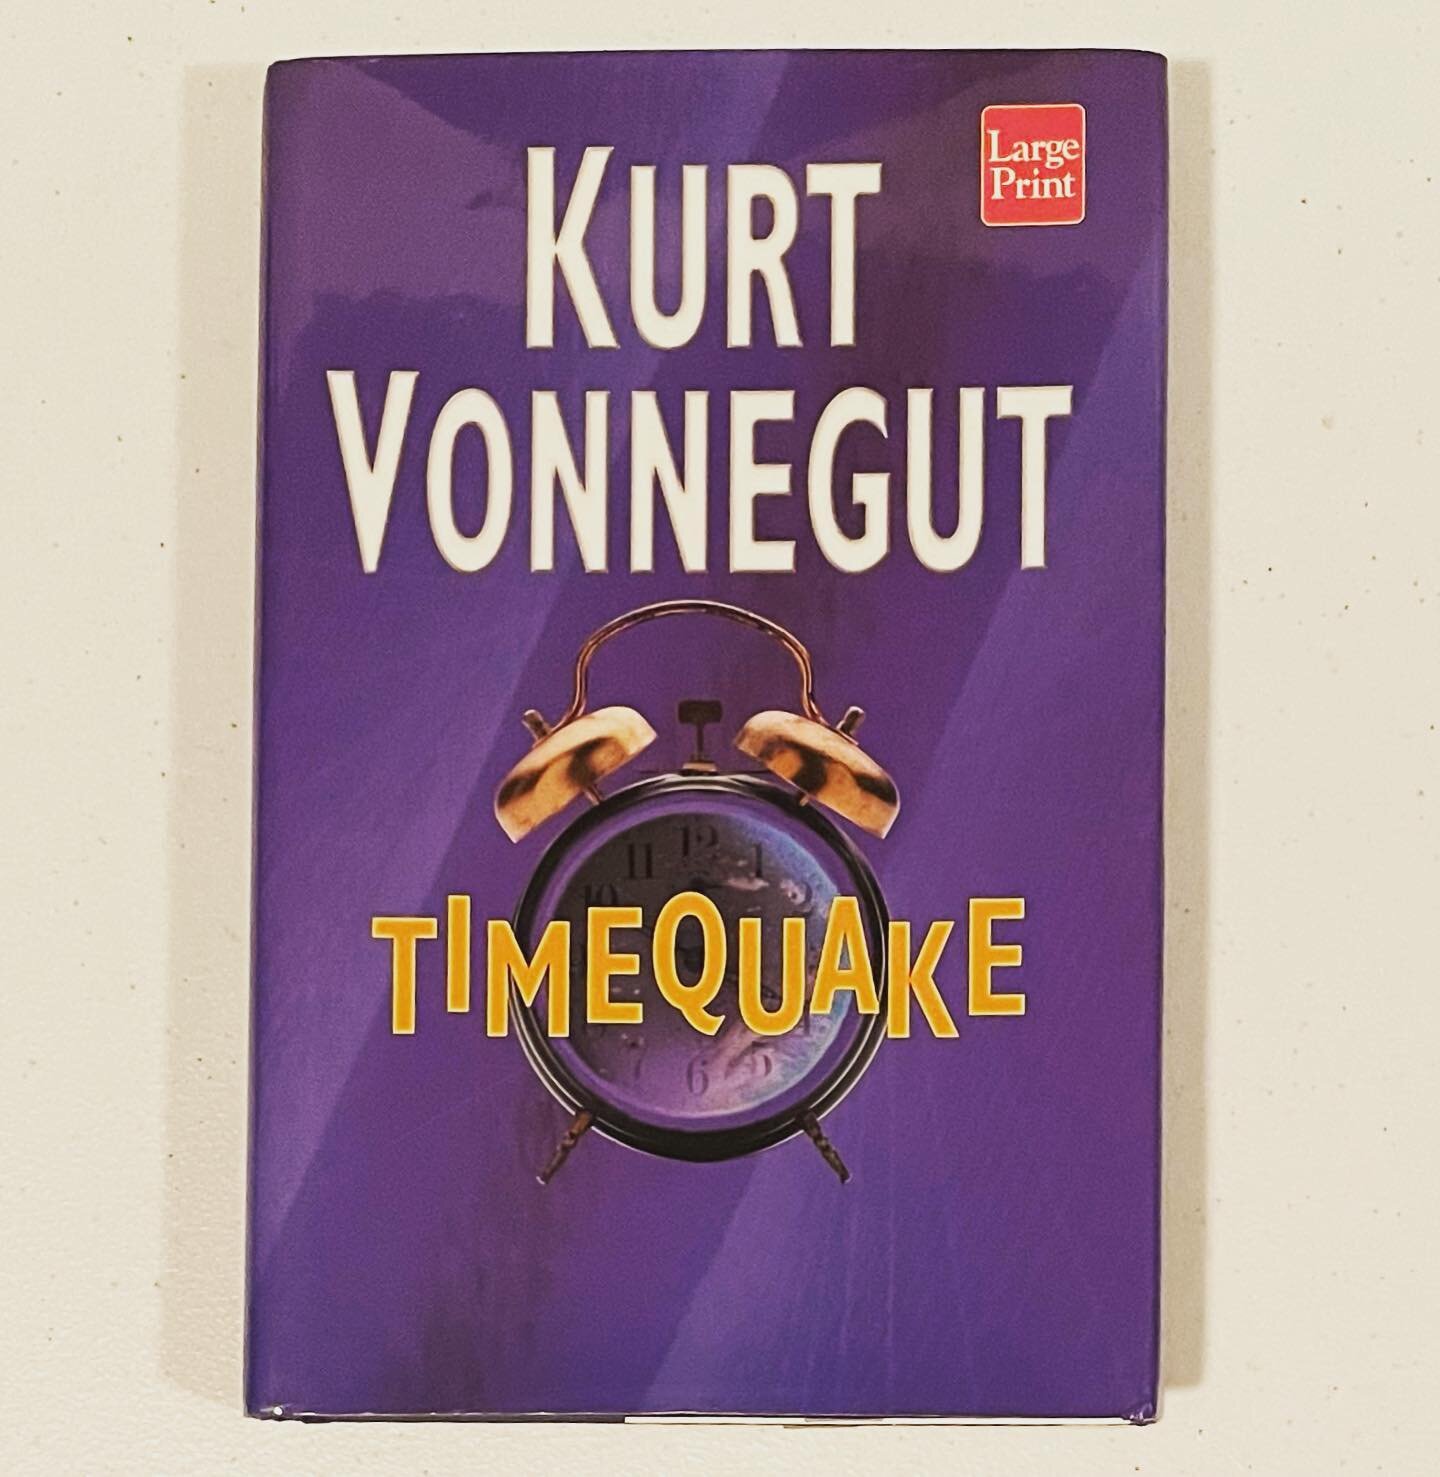 📚 ⏰ 🕰 
𝑻𝒊𝒎𝒆𝒒𝒖𝒂𝒌𝒆 &mdash; Large Print Hardcover Edition &mdash; GP Putnam Publishing, 1997
#KurtVonnegut
#Timequake
#BookCollection
#Bookstagram
📚⏰🕰